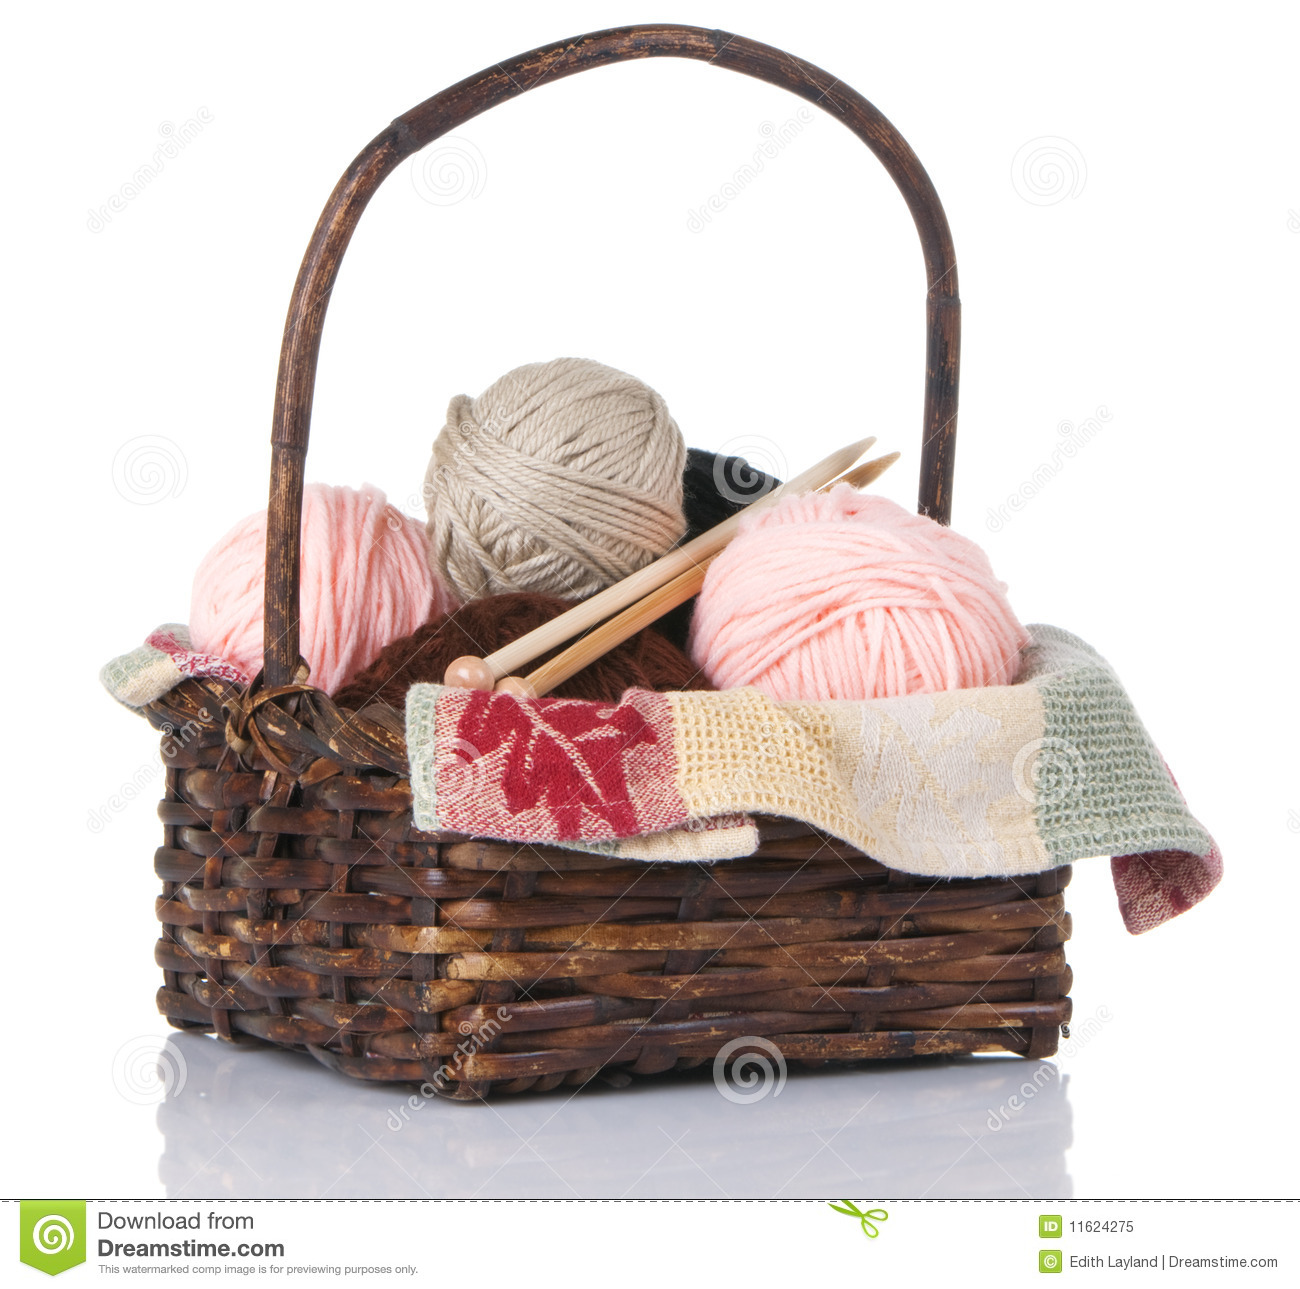 Knitting Basket With Yarn And Needles Royalty Free Stock Photo   Image